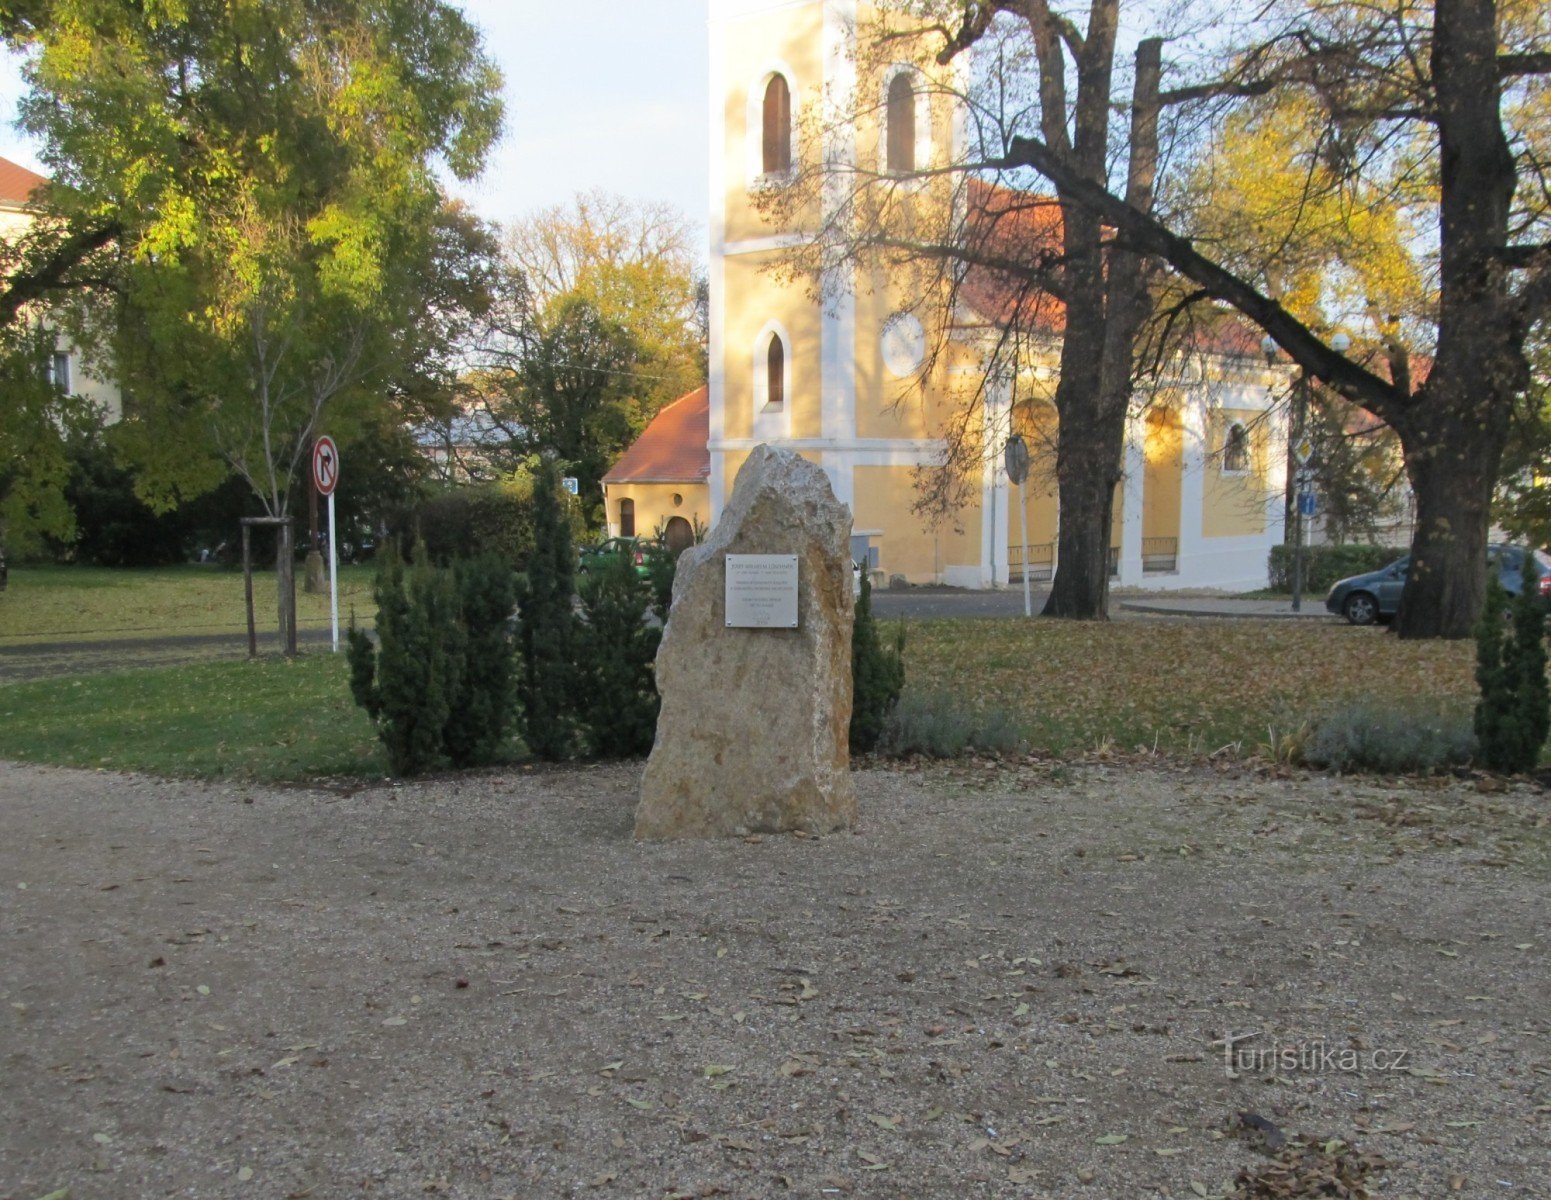 Spomenik Josefu von Löschnerju v Kadanih